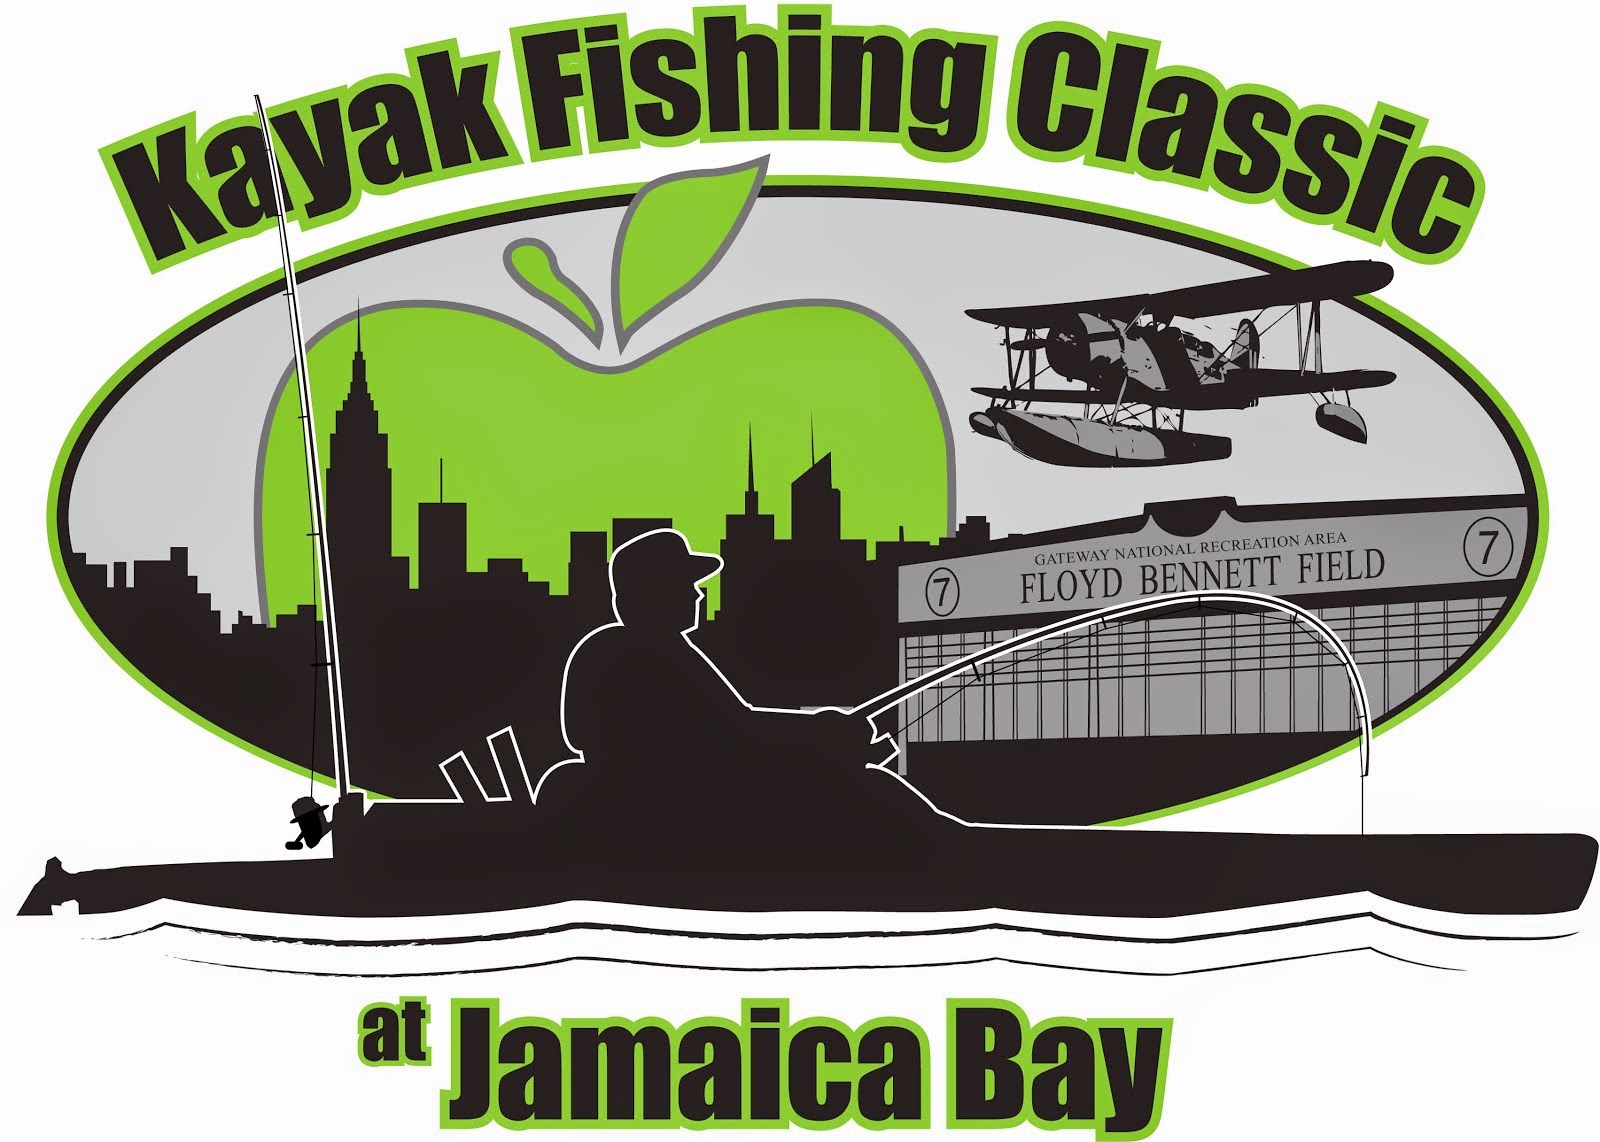 JAMAICA BAY KAYAK FISHING CLASSIC BY CAPTAIN KAYAK